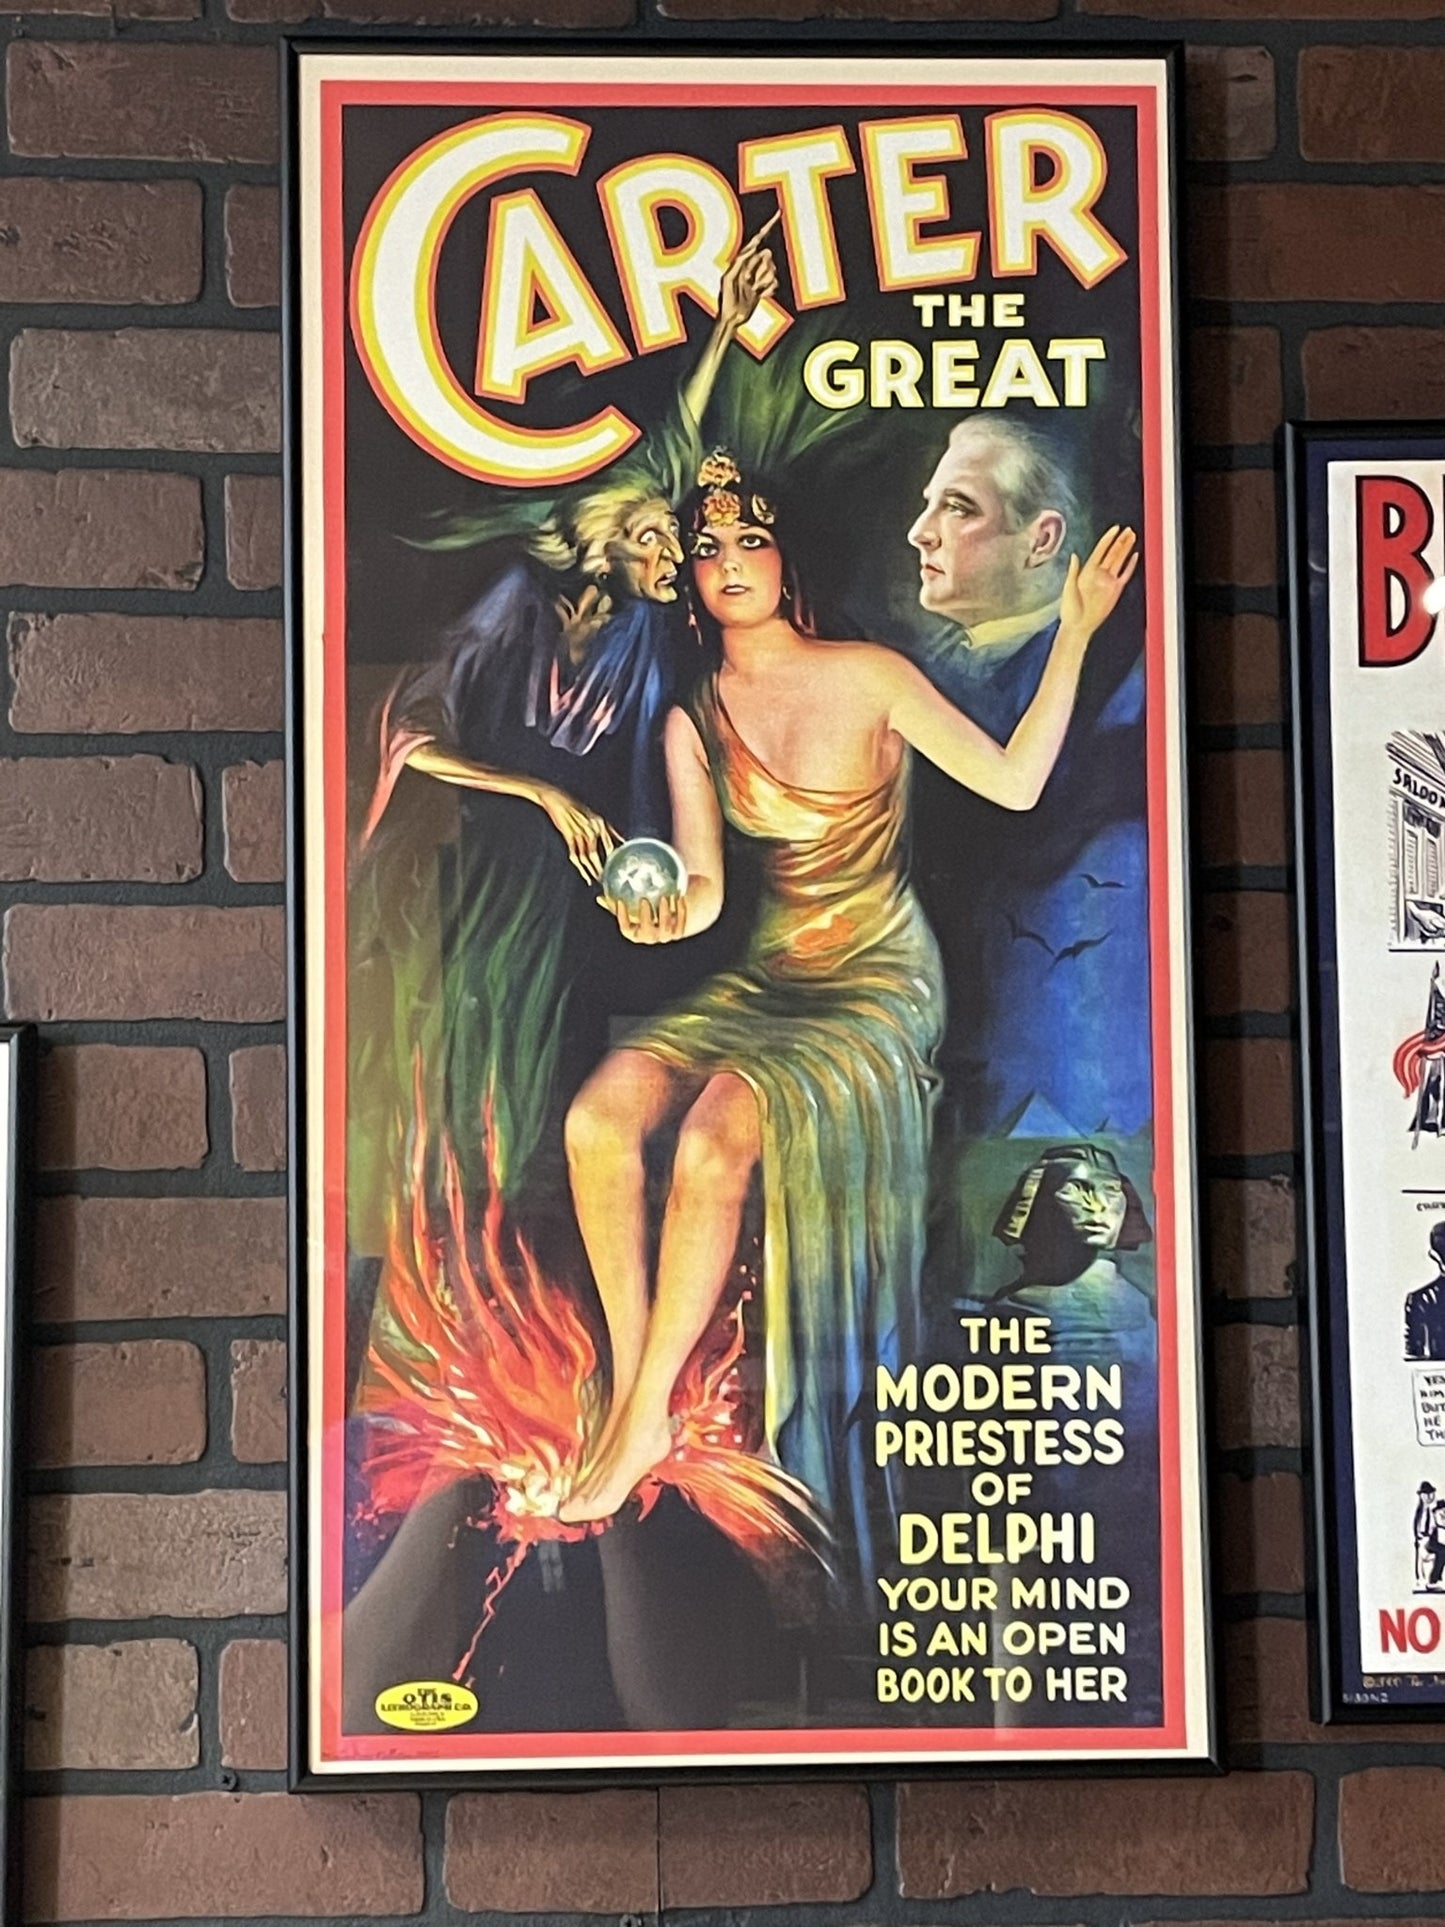 Vintage Magic Poster - 1926 Carter "Priestess of Delphi"